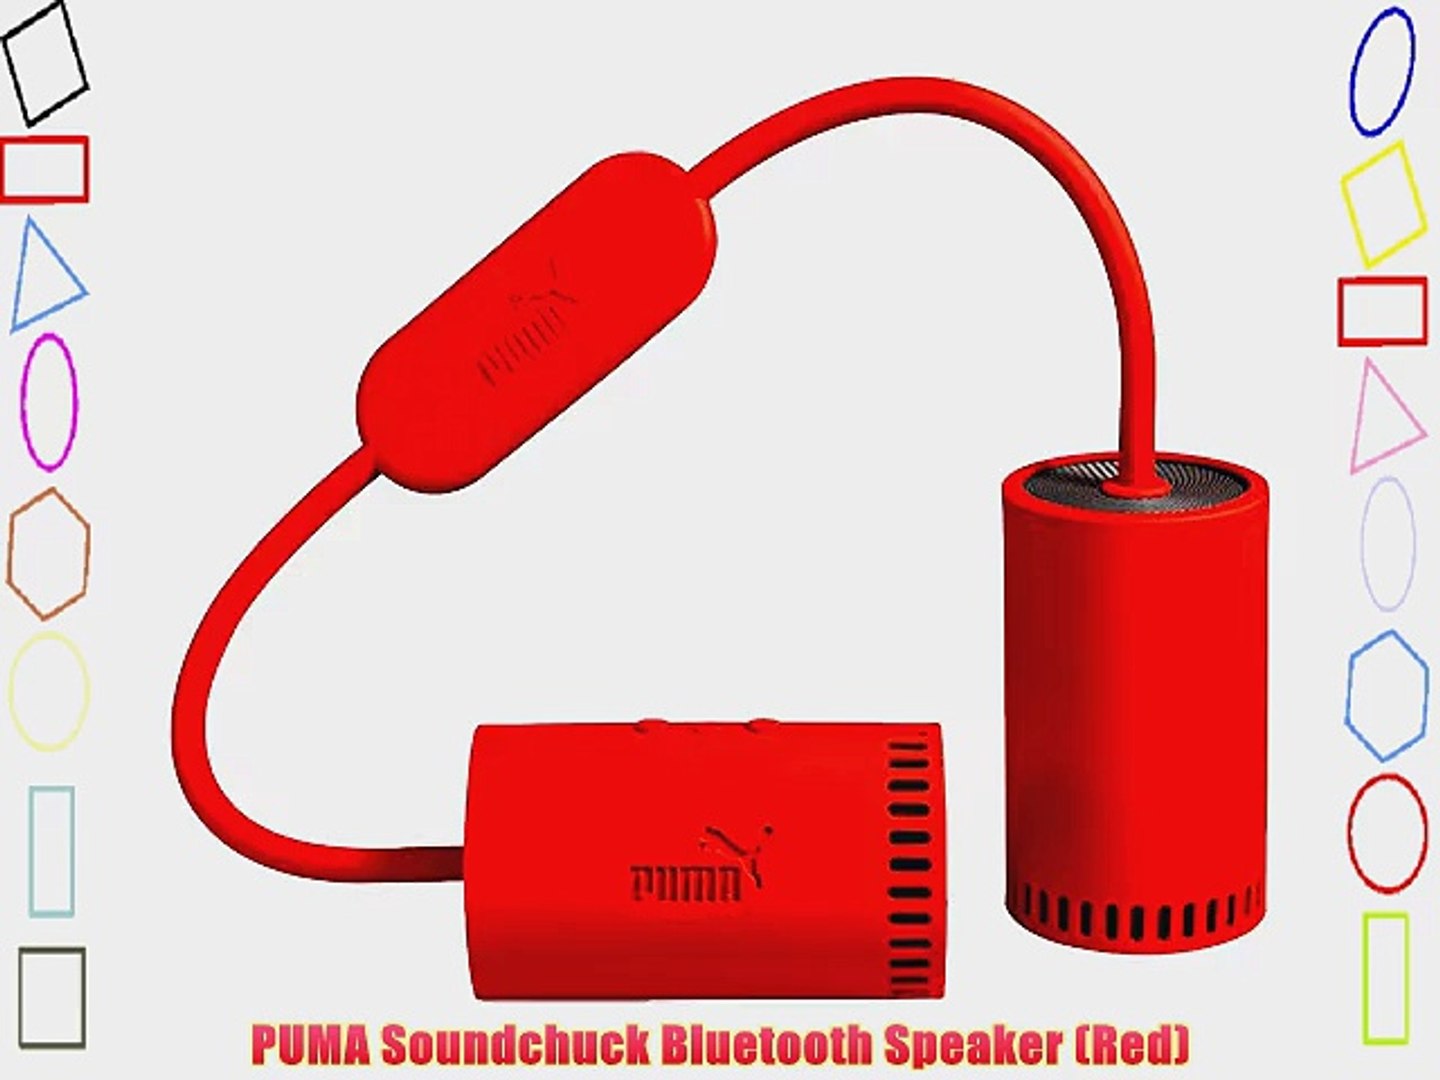 PUMA Soundchuck Bluetooth Speaker (Red) - video Dailymotion